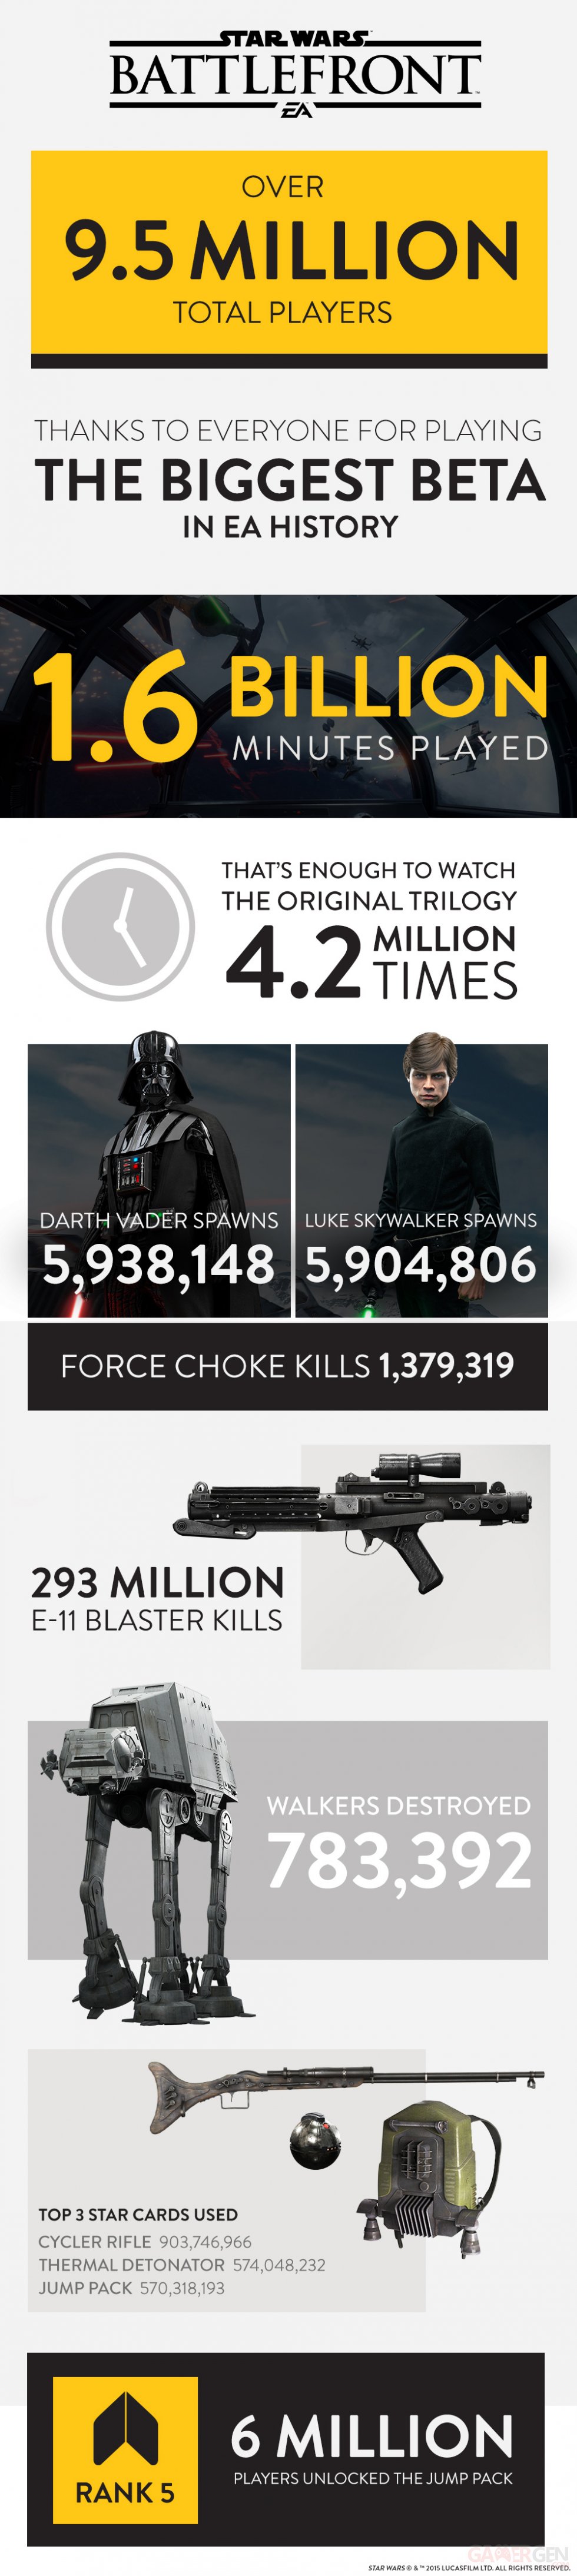 Star Wars Battlefront statistiques be?ta